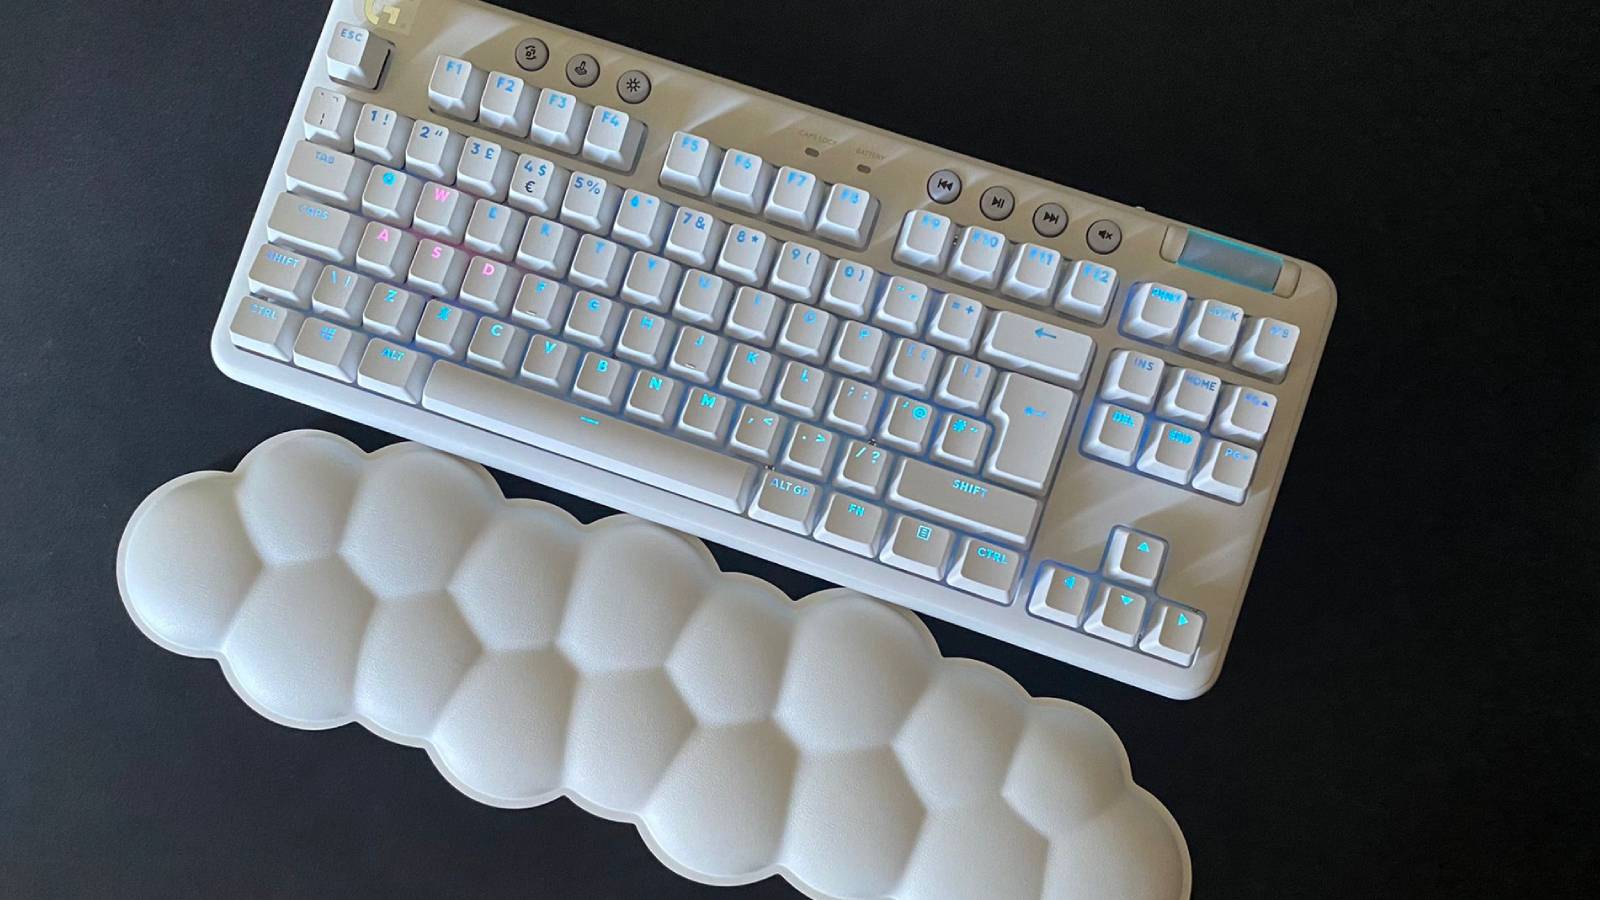 Logitech Aurora G715 Clicky Wireless Keyboard in White